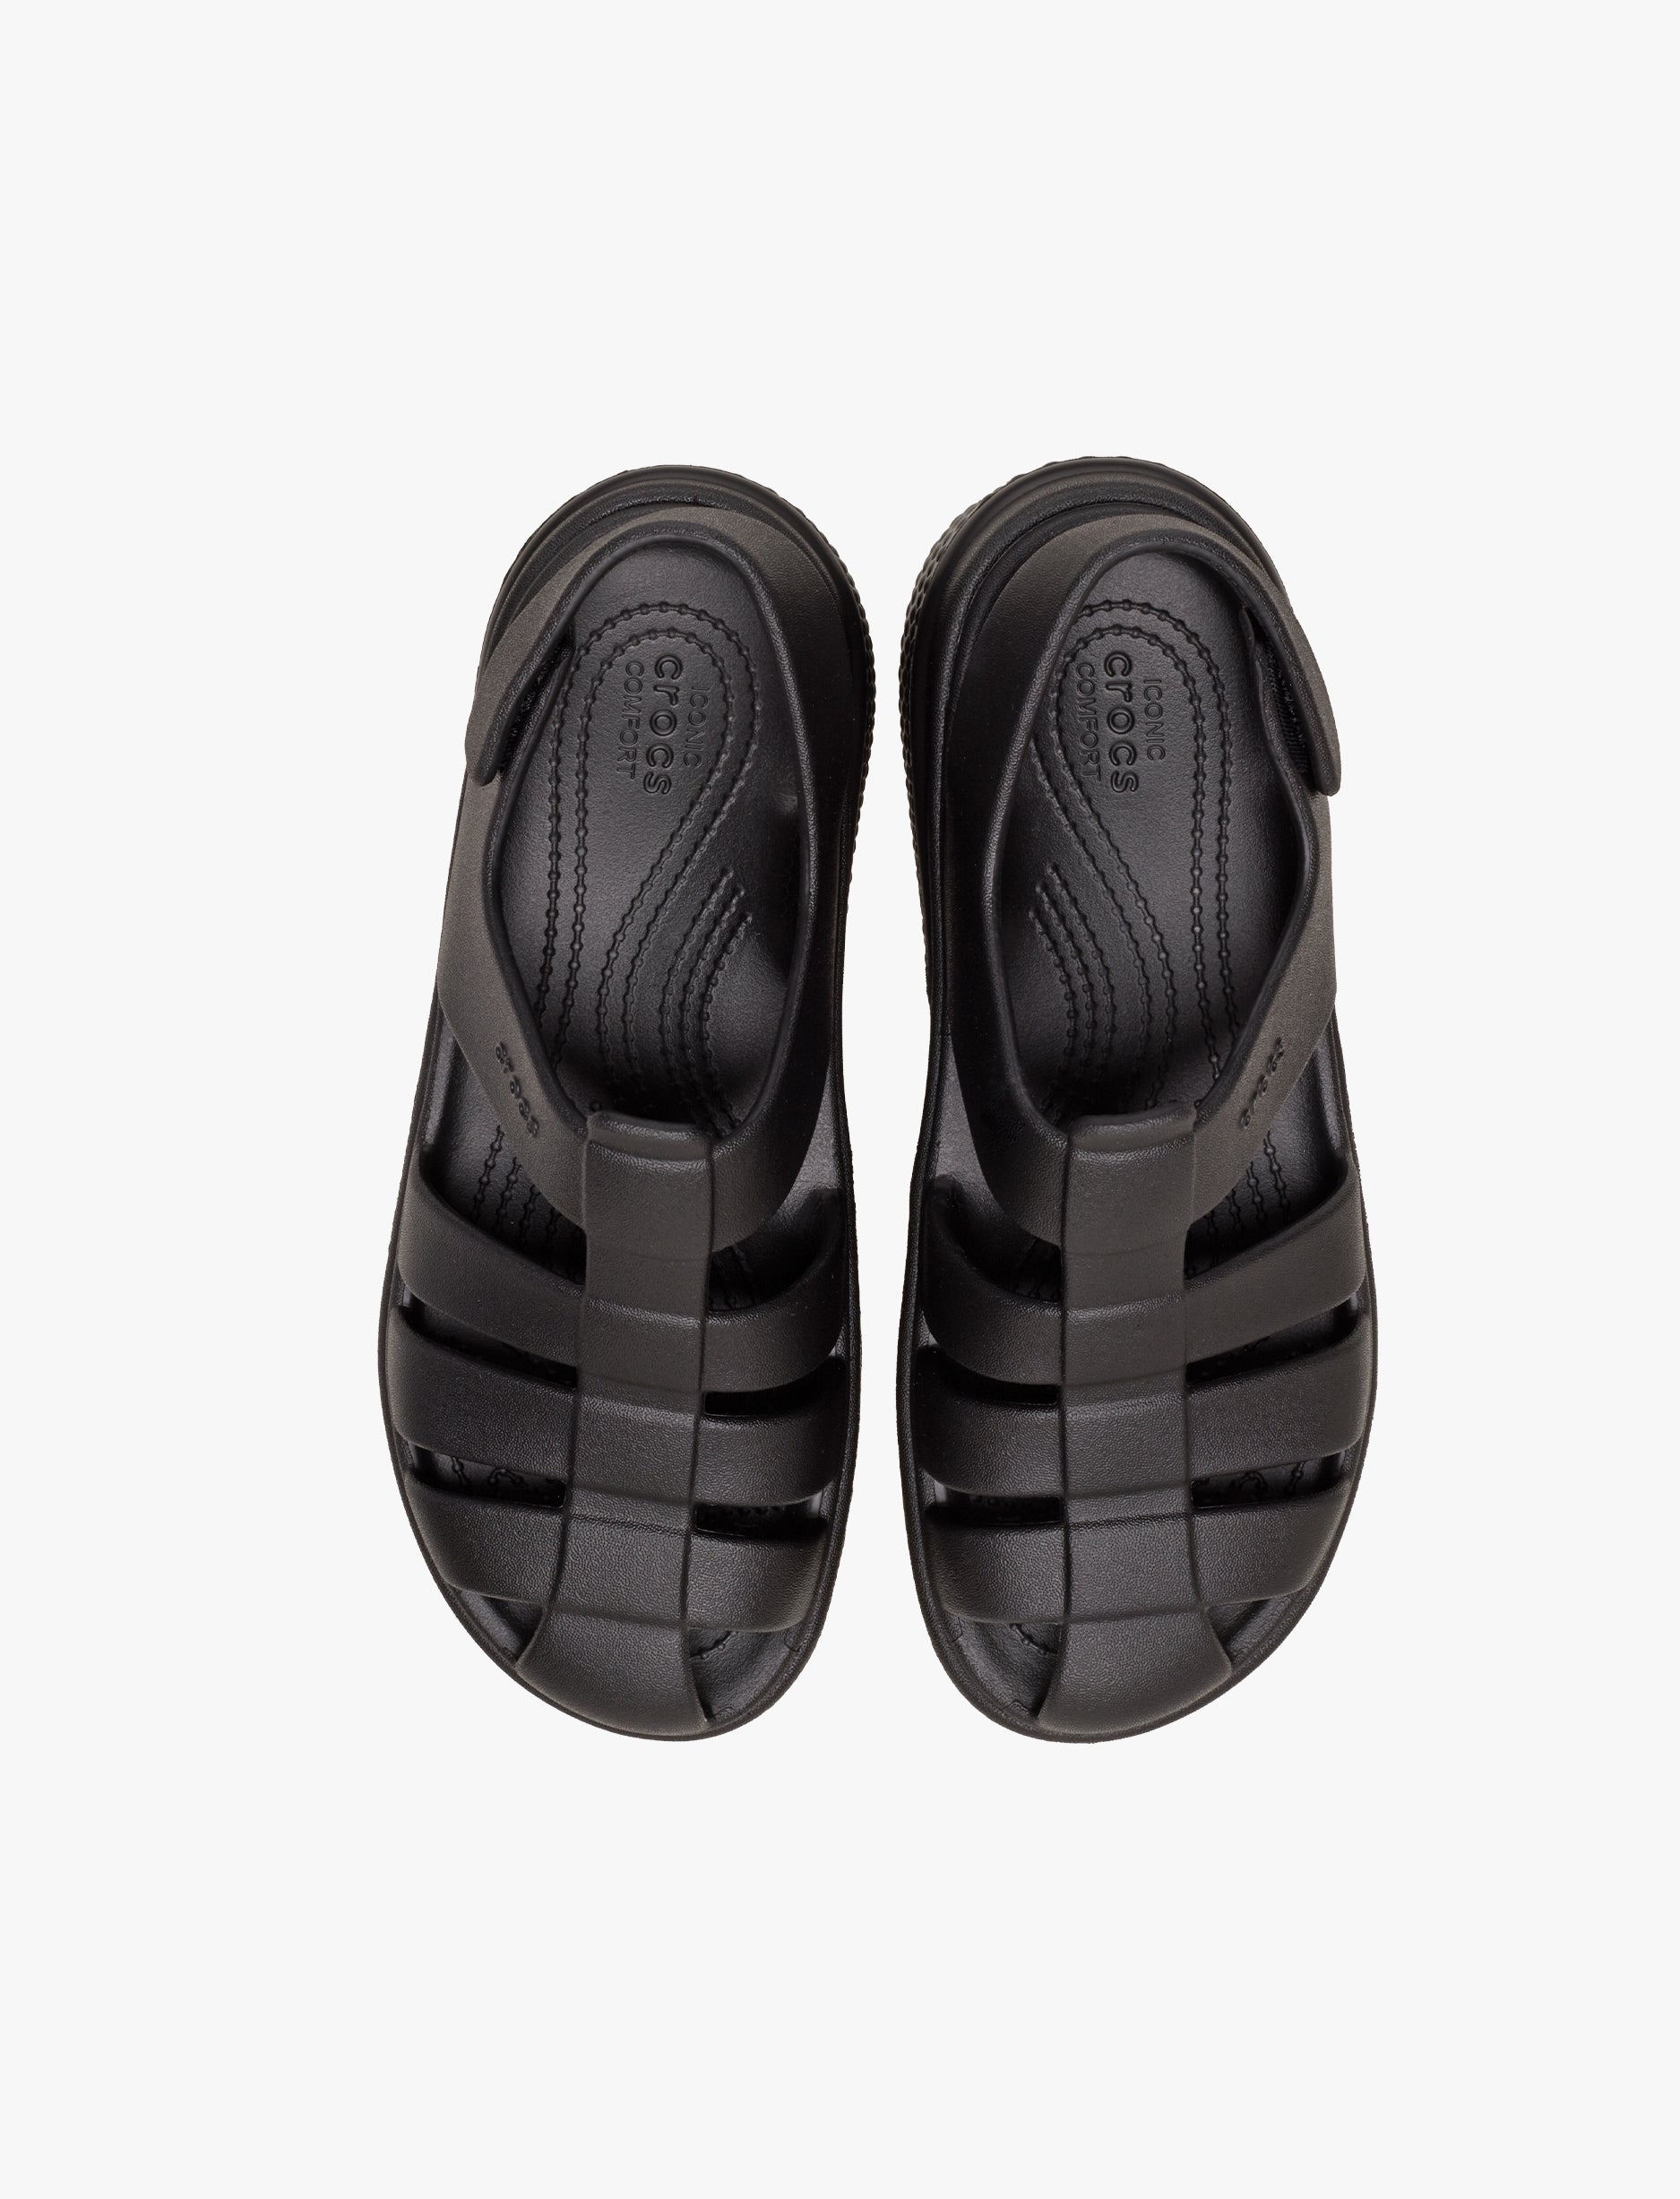 Crocs Stomp Fisherman Sandal - סנדלי פלטפורמה קרוקס לנשים בצבע שחור